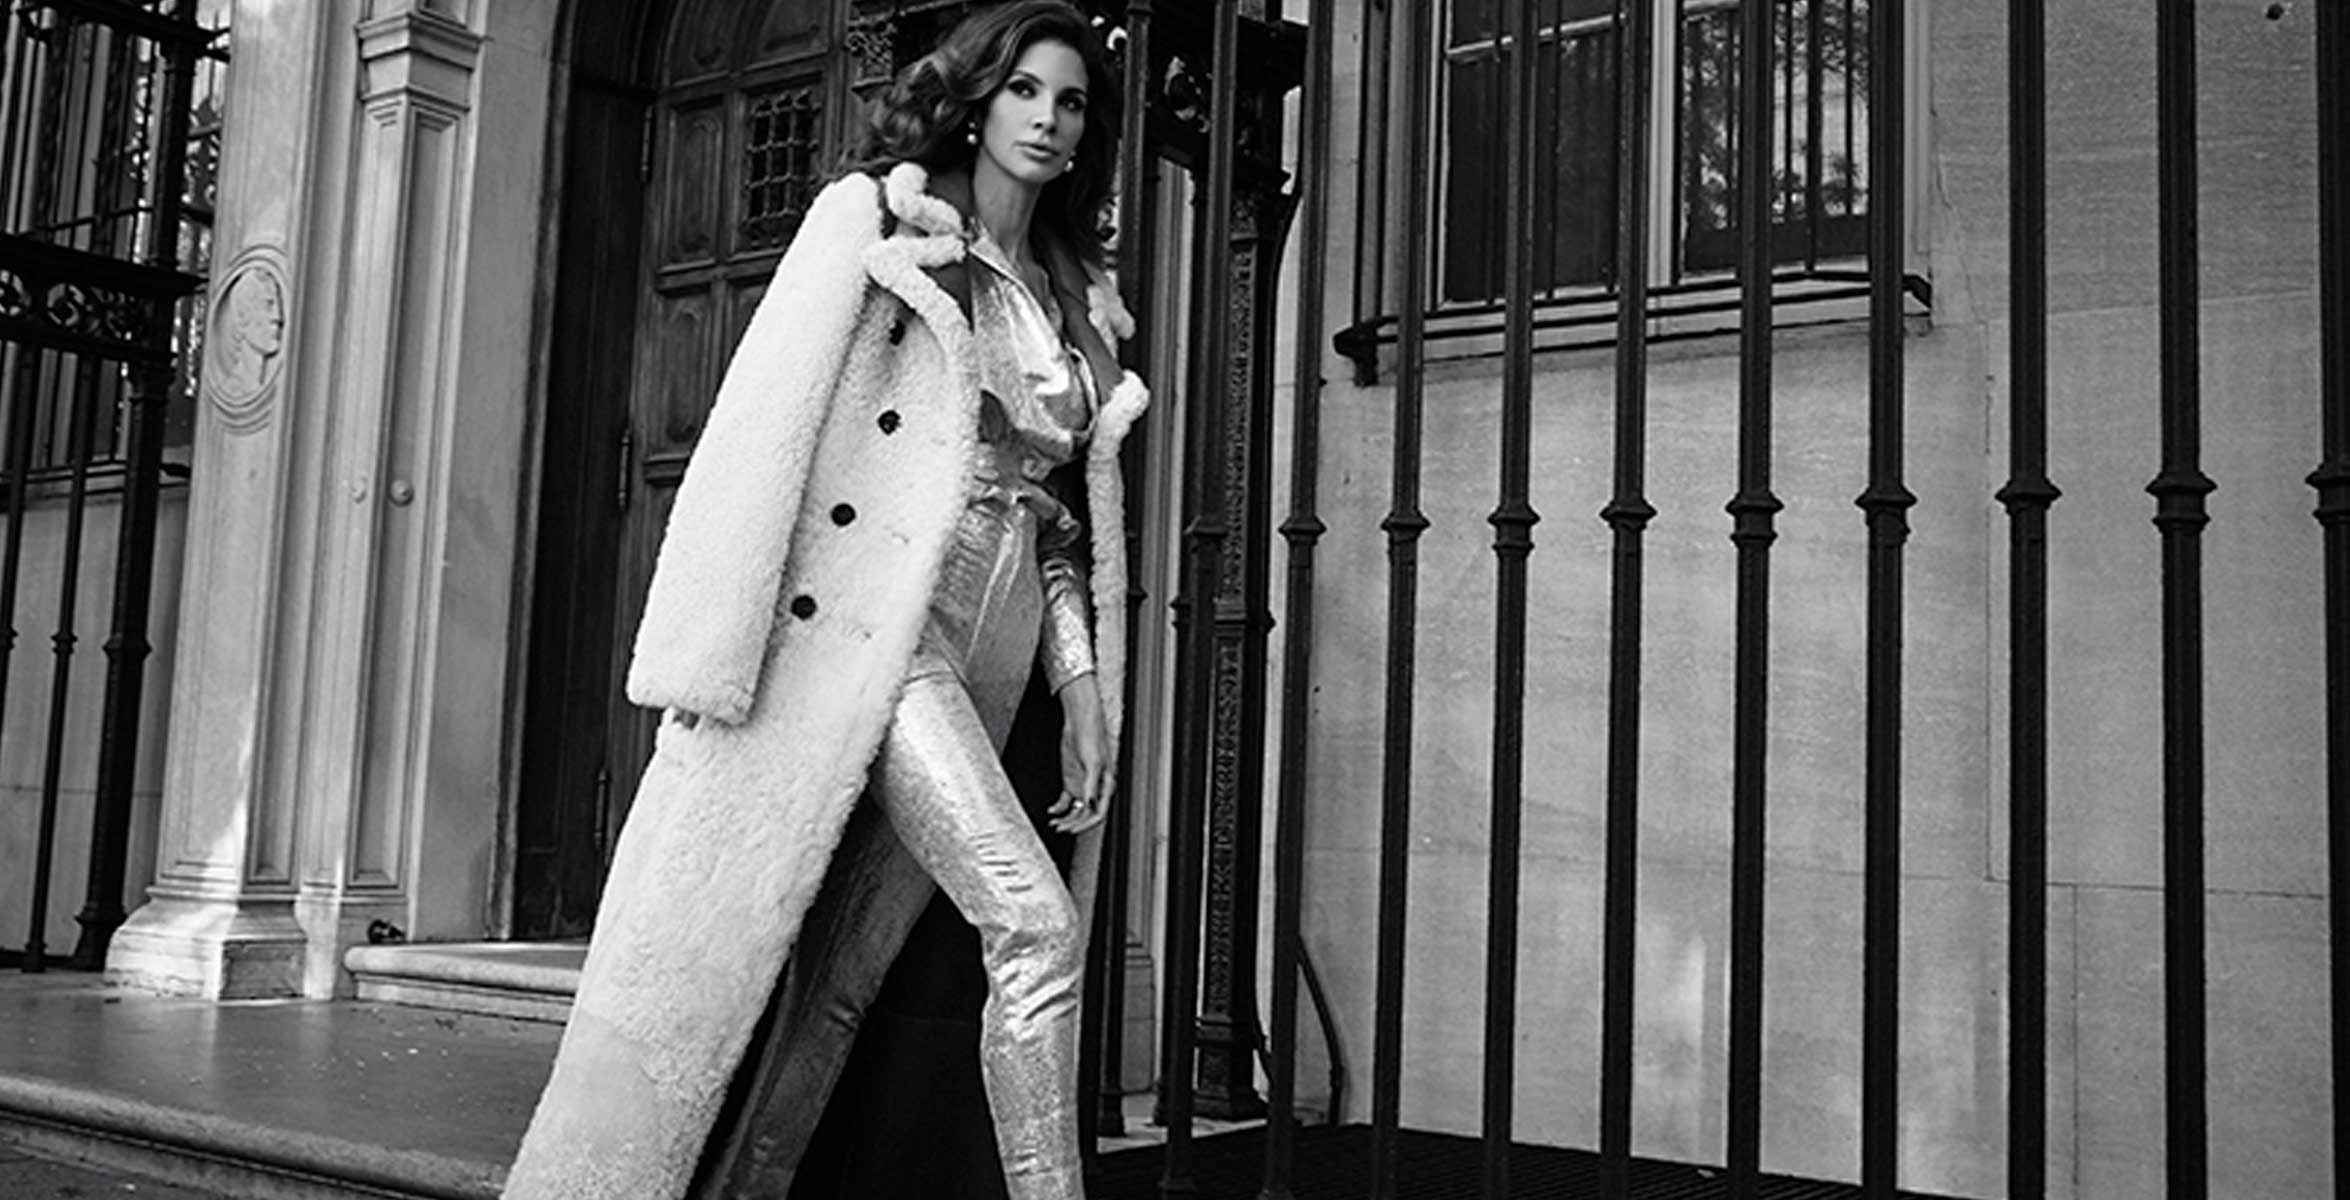 Hope Dworaczyk Smith models white coat from luxury designer Chloé.